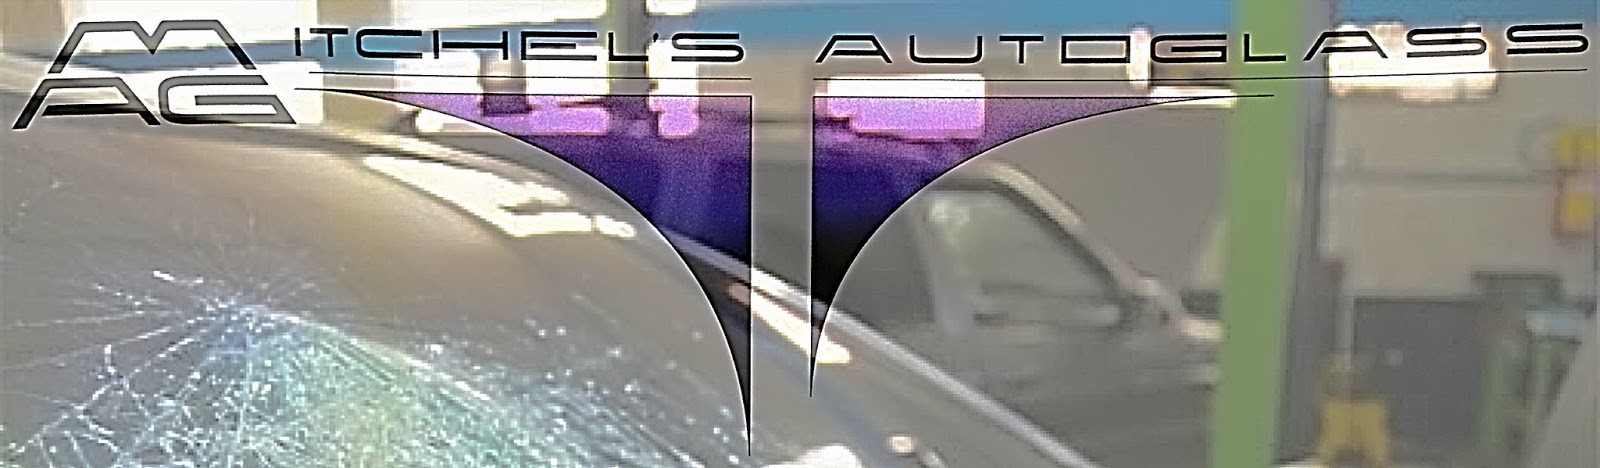 Photo of Mitchels Auto Glass in Whitestone City, New York, United States - 1 Picture of Point of interest, Establishment, Car repair